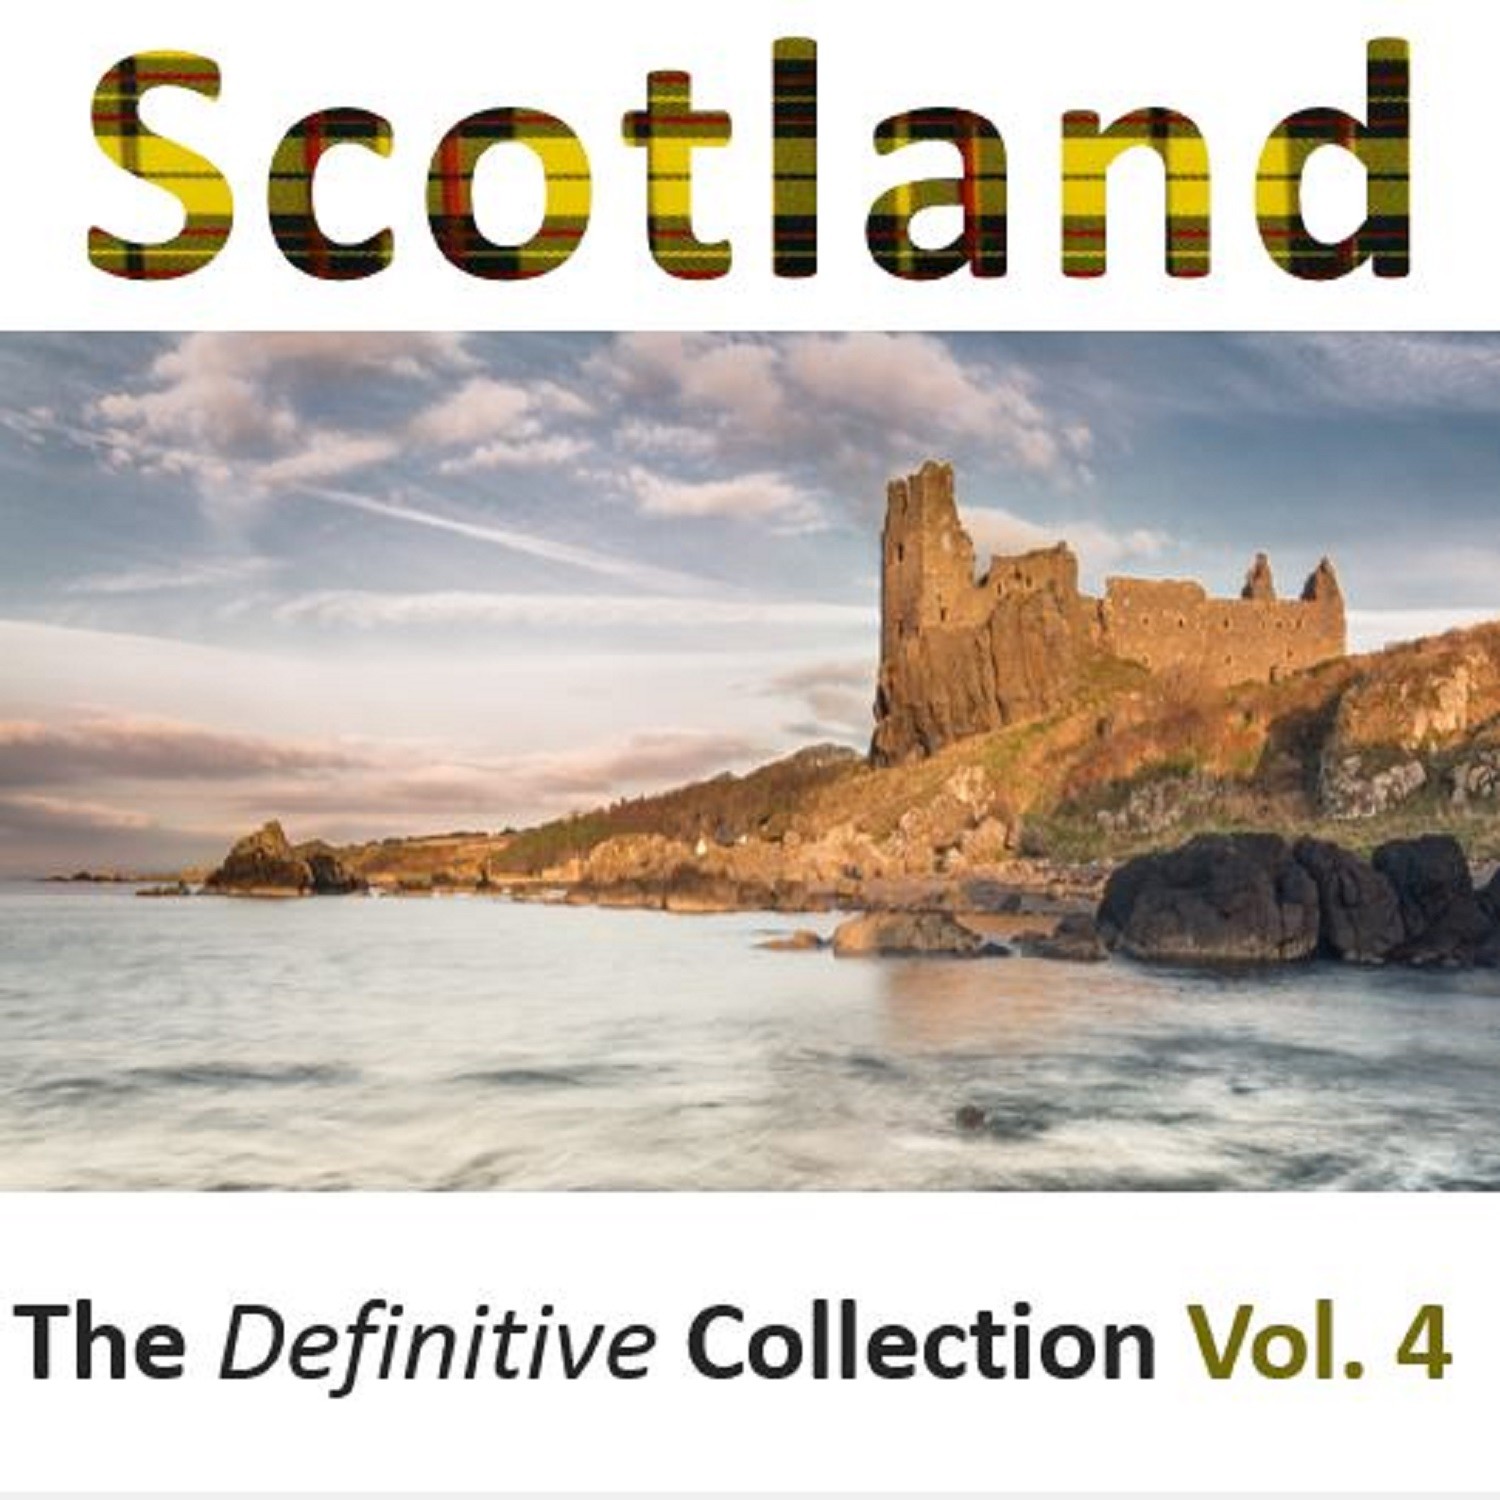 Scotland the Brave (Scotland 4 Mix)